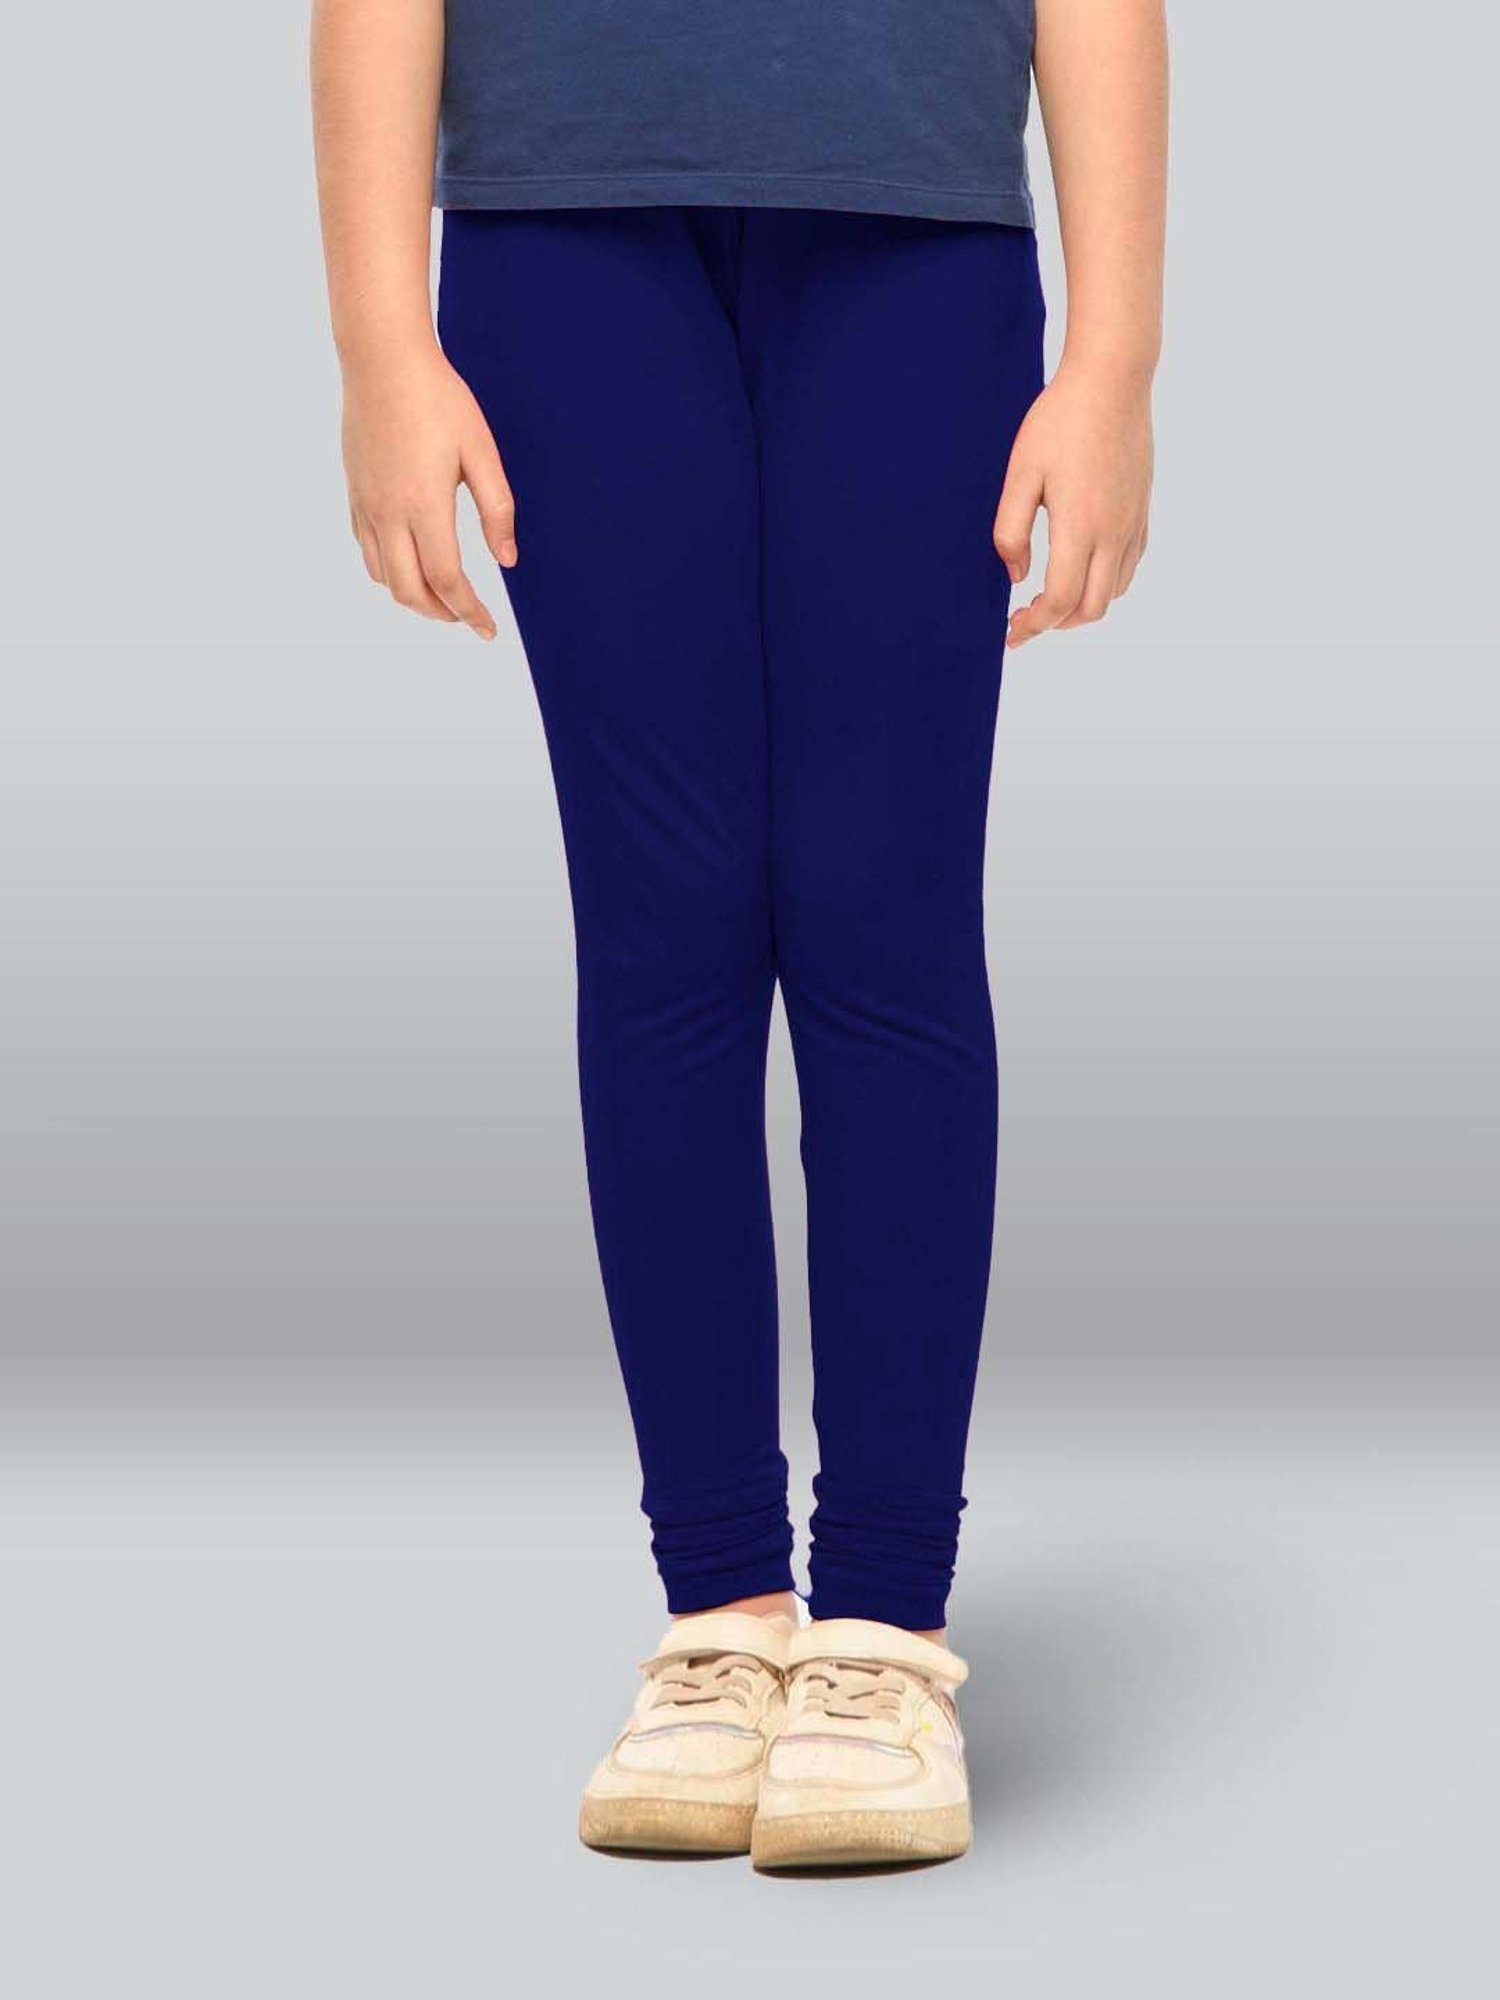 Buy Fablab Women's Cotton Lycra Ankle Length Leggings Combo Pack of -10  (BlueBrownSkyblueGreenPinkOrangeWhiteBlackBeigeYellow,Freesize.) at  Amazon.in